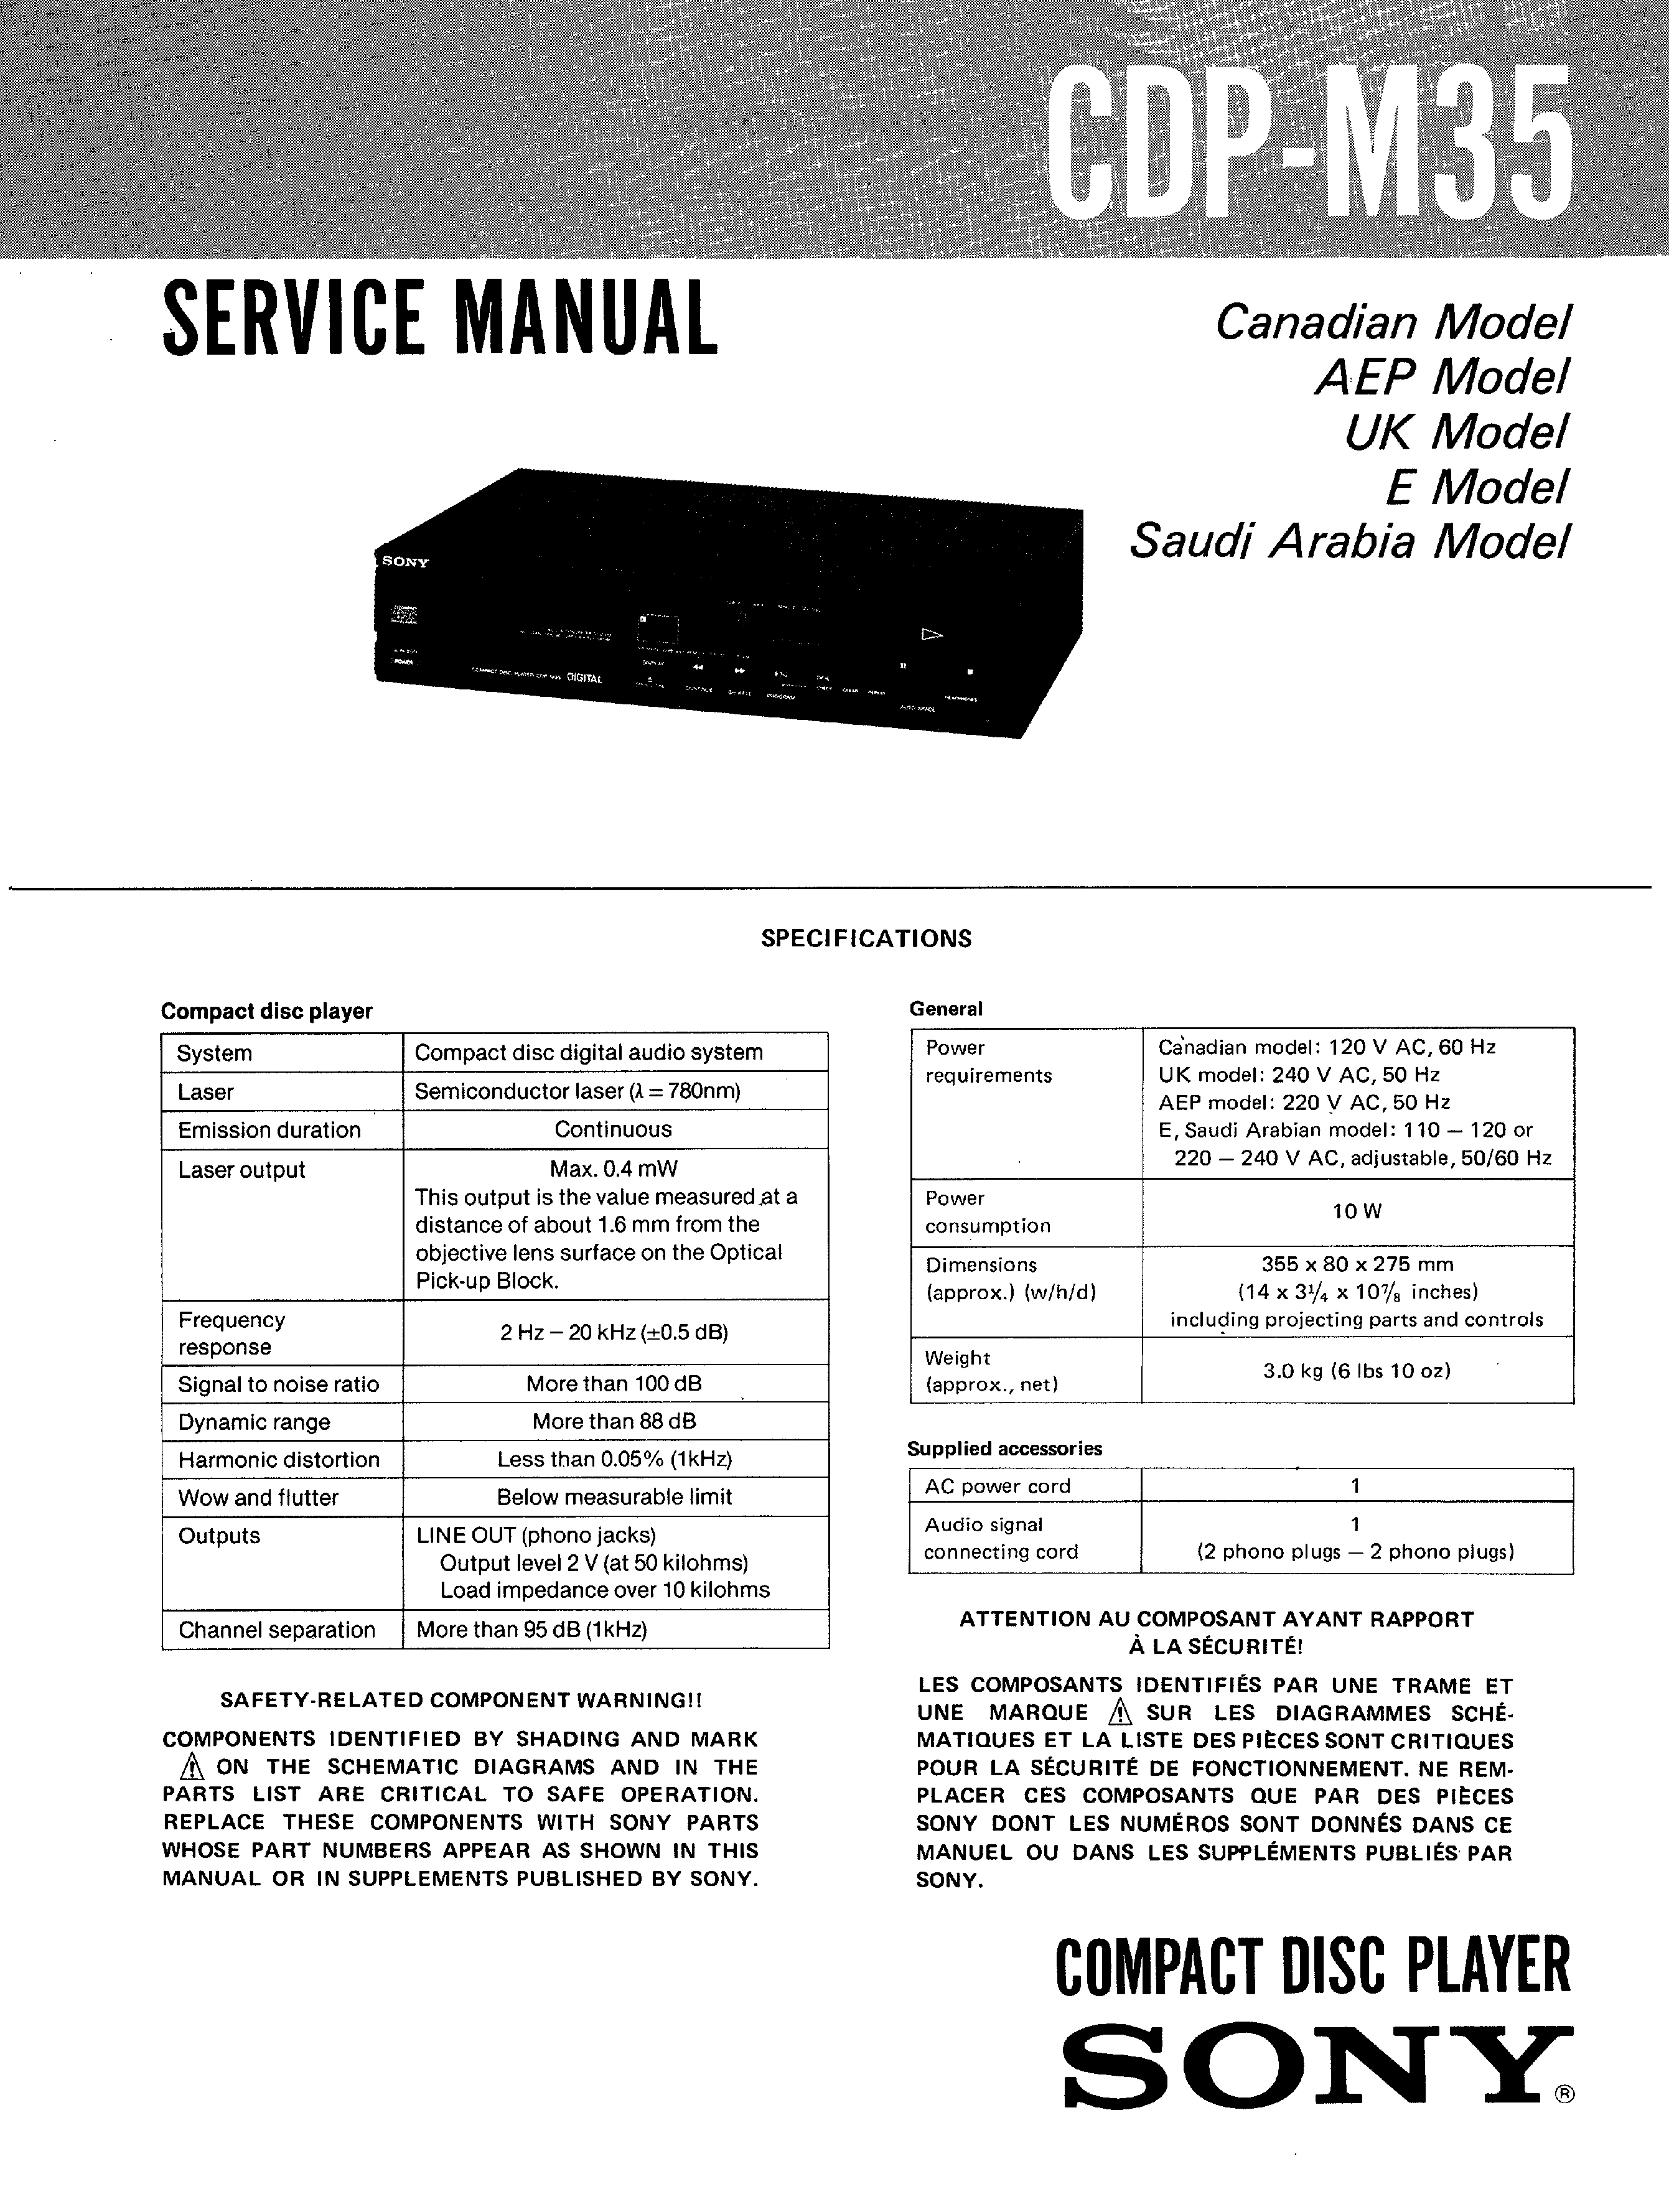 Sony CDP-M 35-Manual-1988.jpg